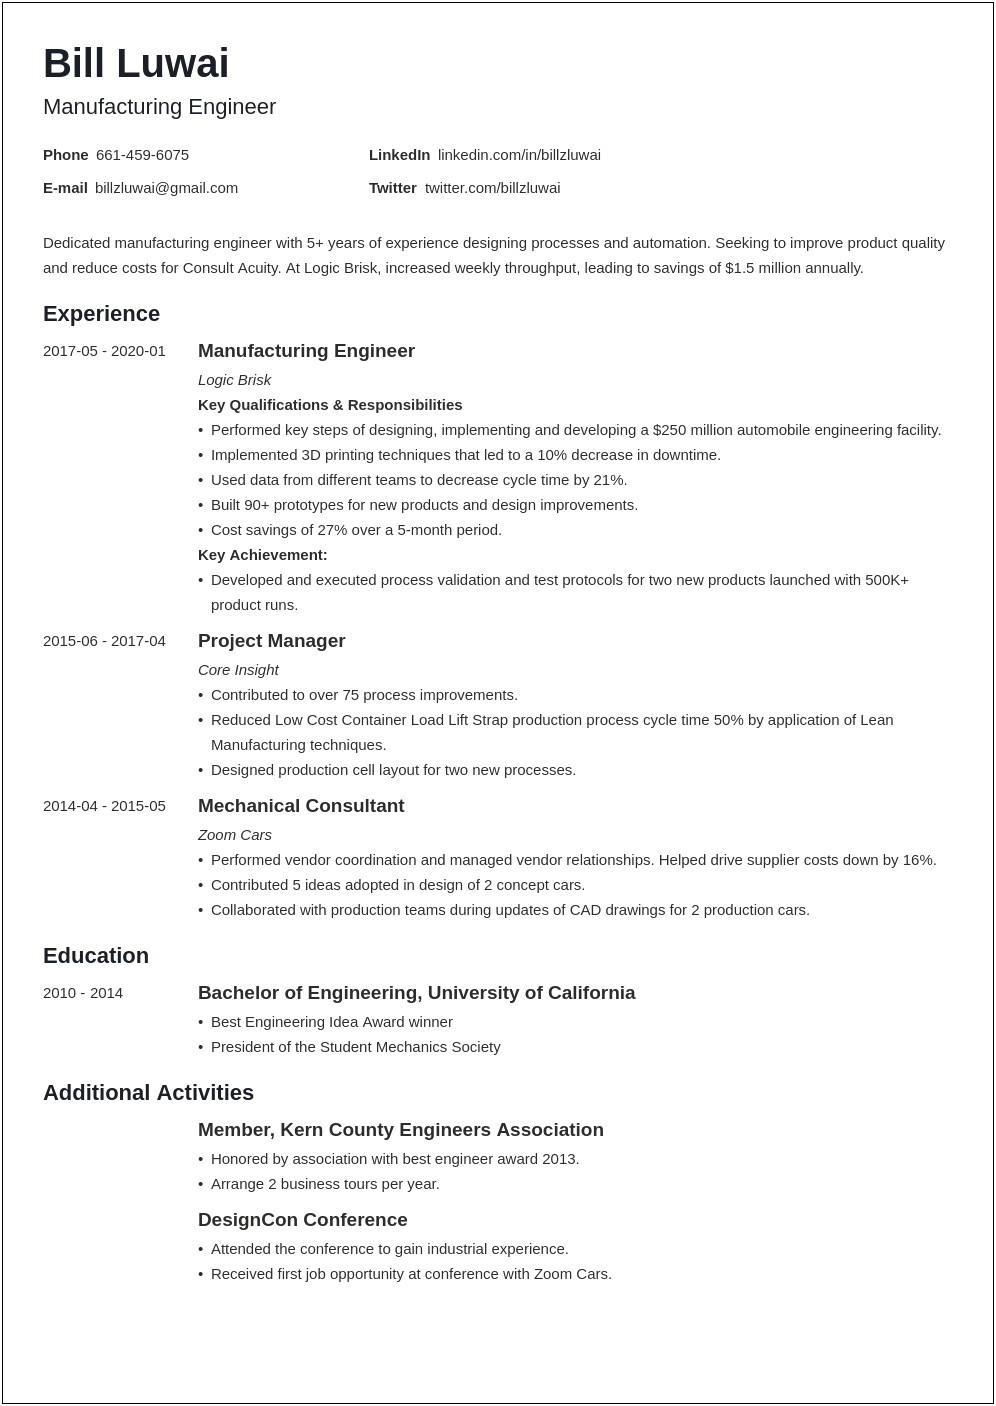 Grip And Electric Job Description Resume